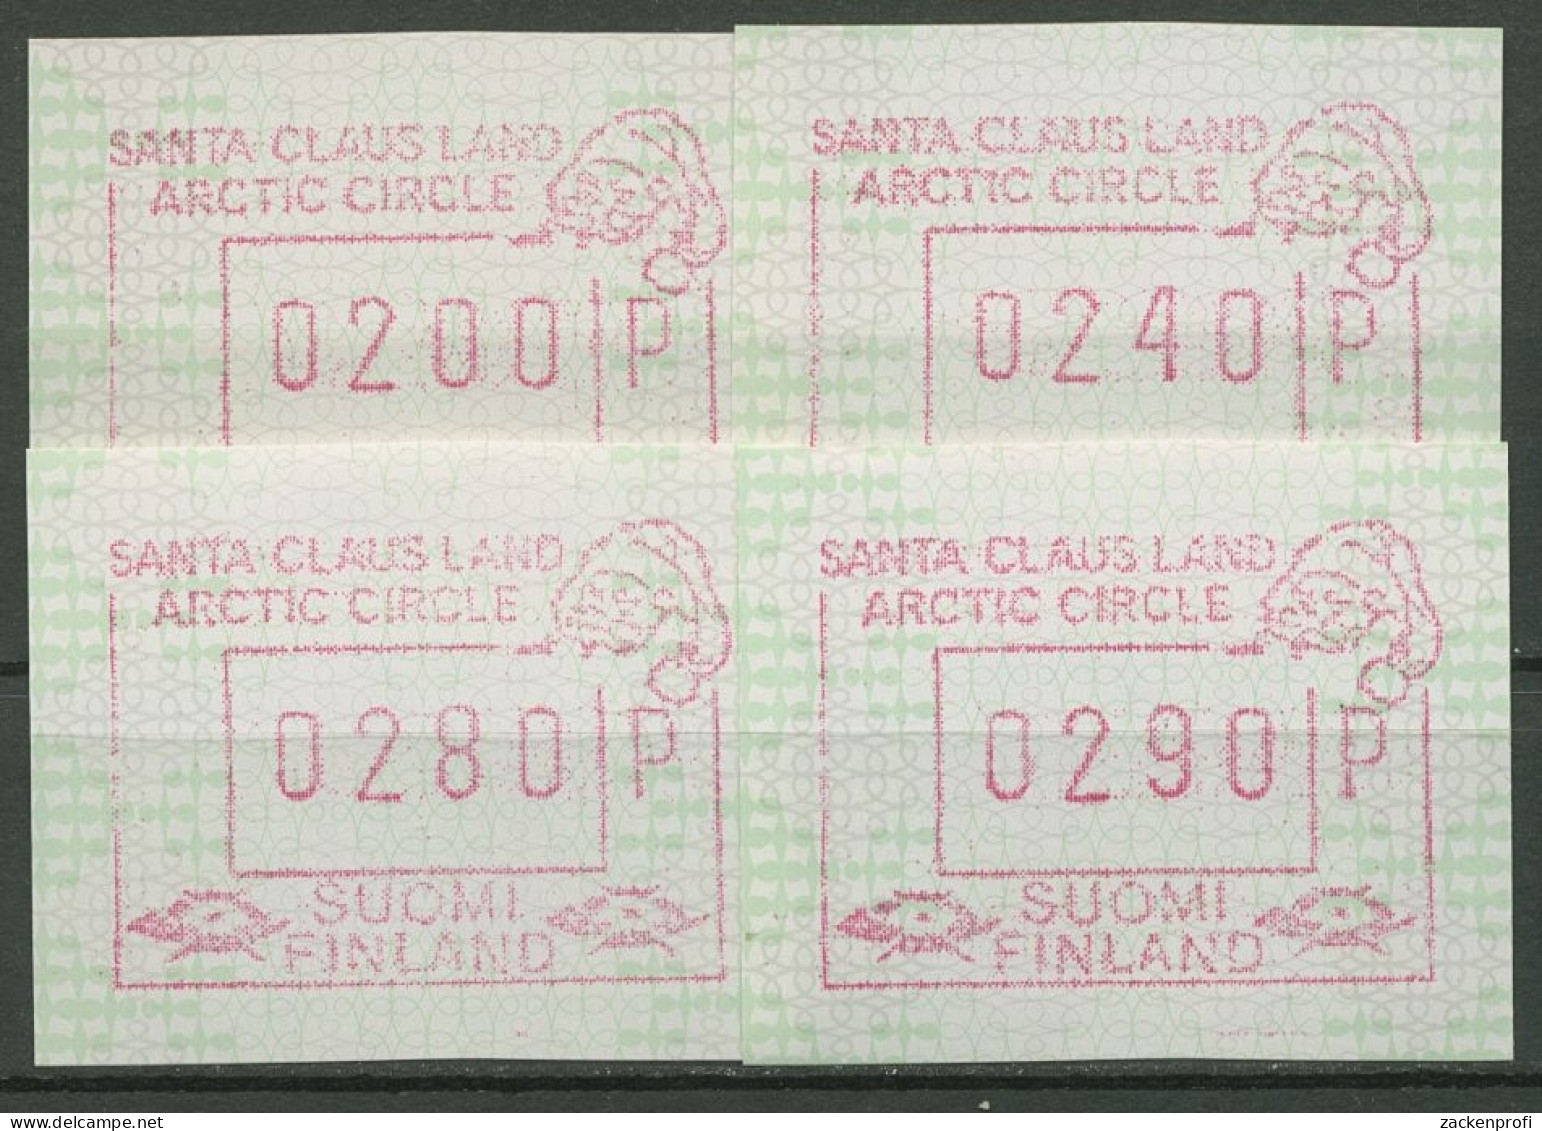 Finnland ATM 1994 SANTA CLAUS LAND ARCTIC CIRCLE Satz ATM 19.1 S 2 Postfrisch - Machine Labels [ATM]